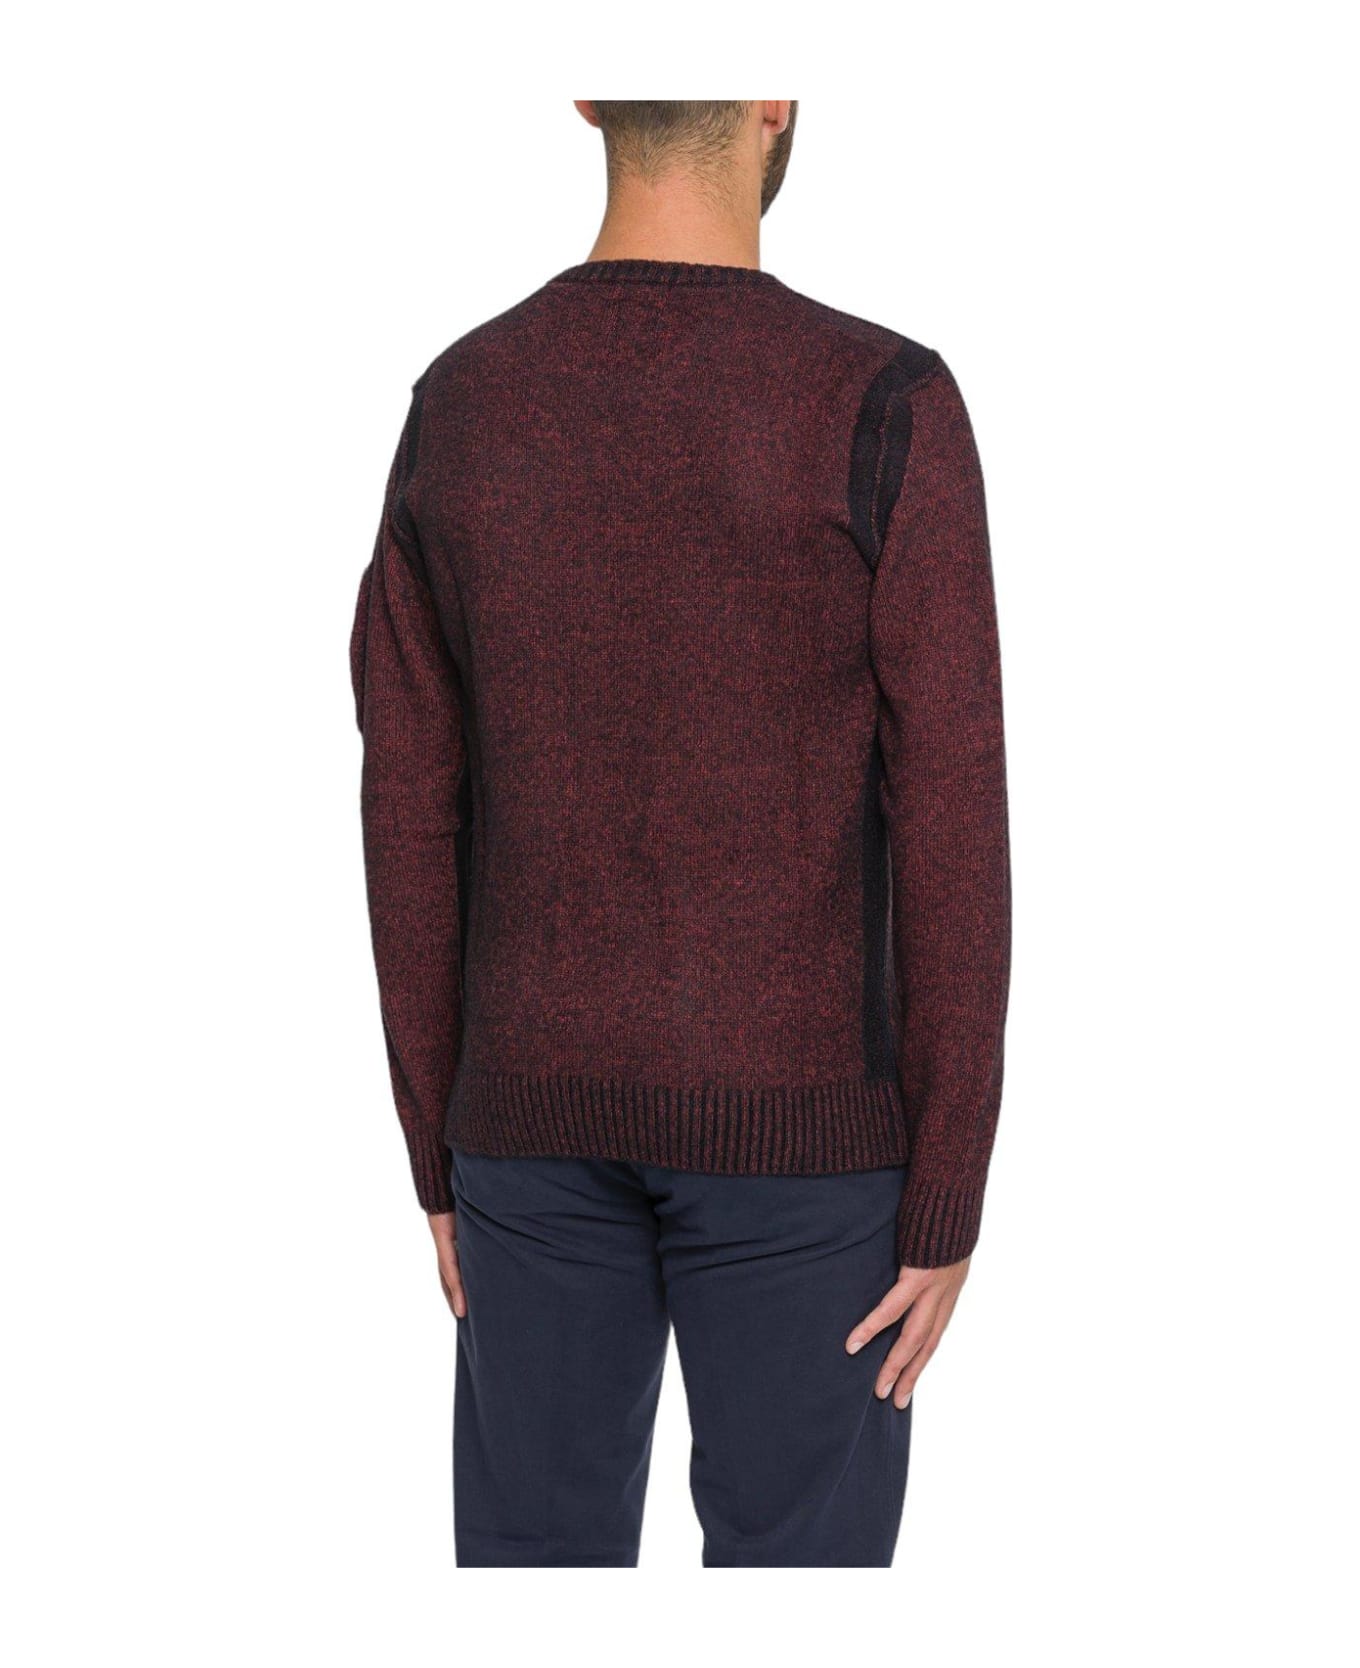 C.P. Company Crewneck Sleeved Sweater - BRICK